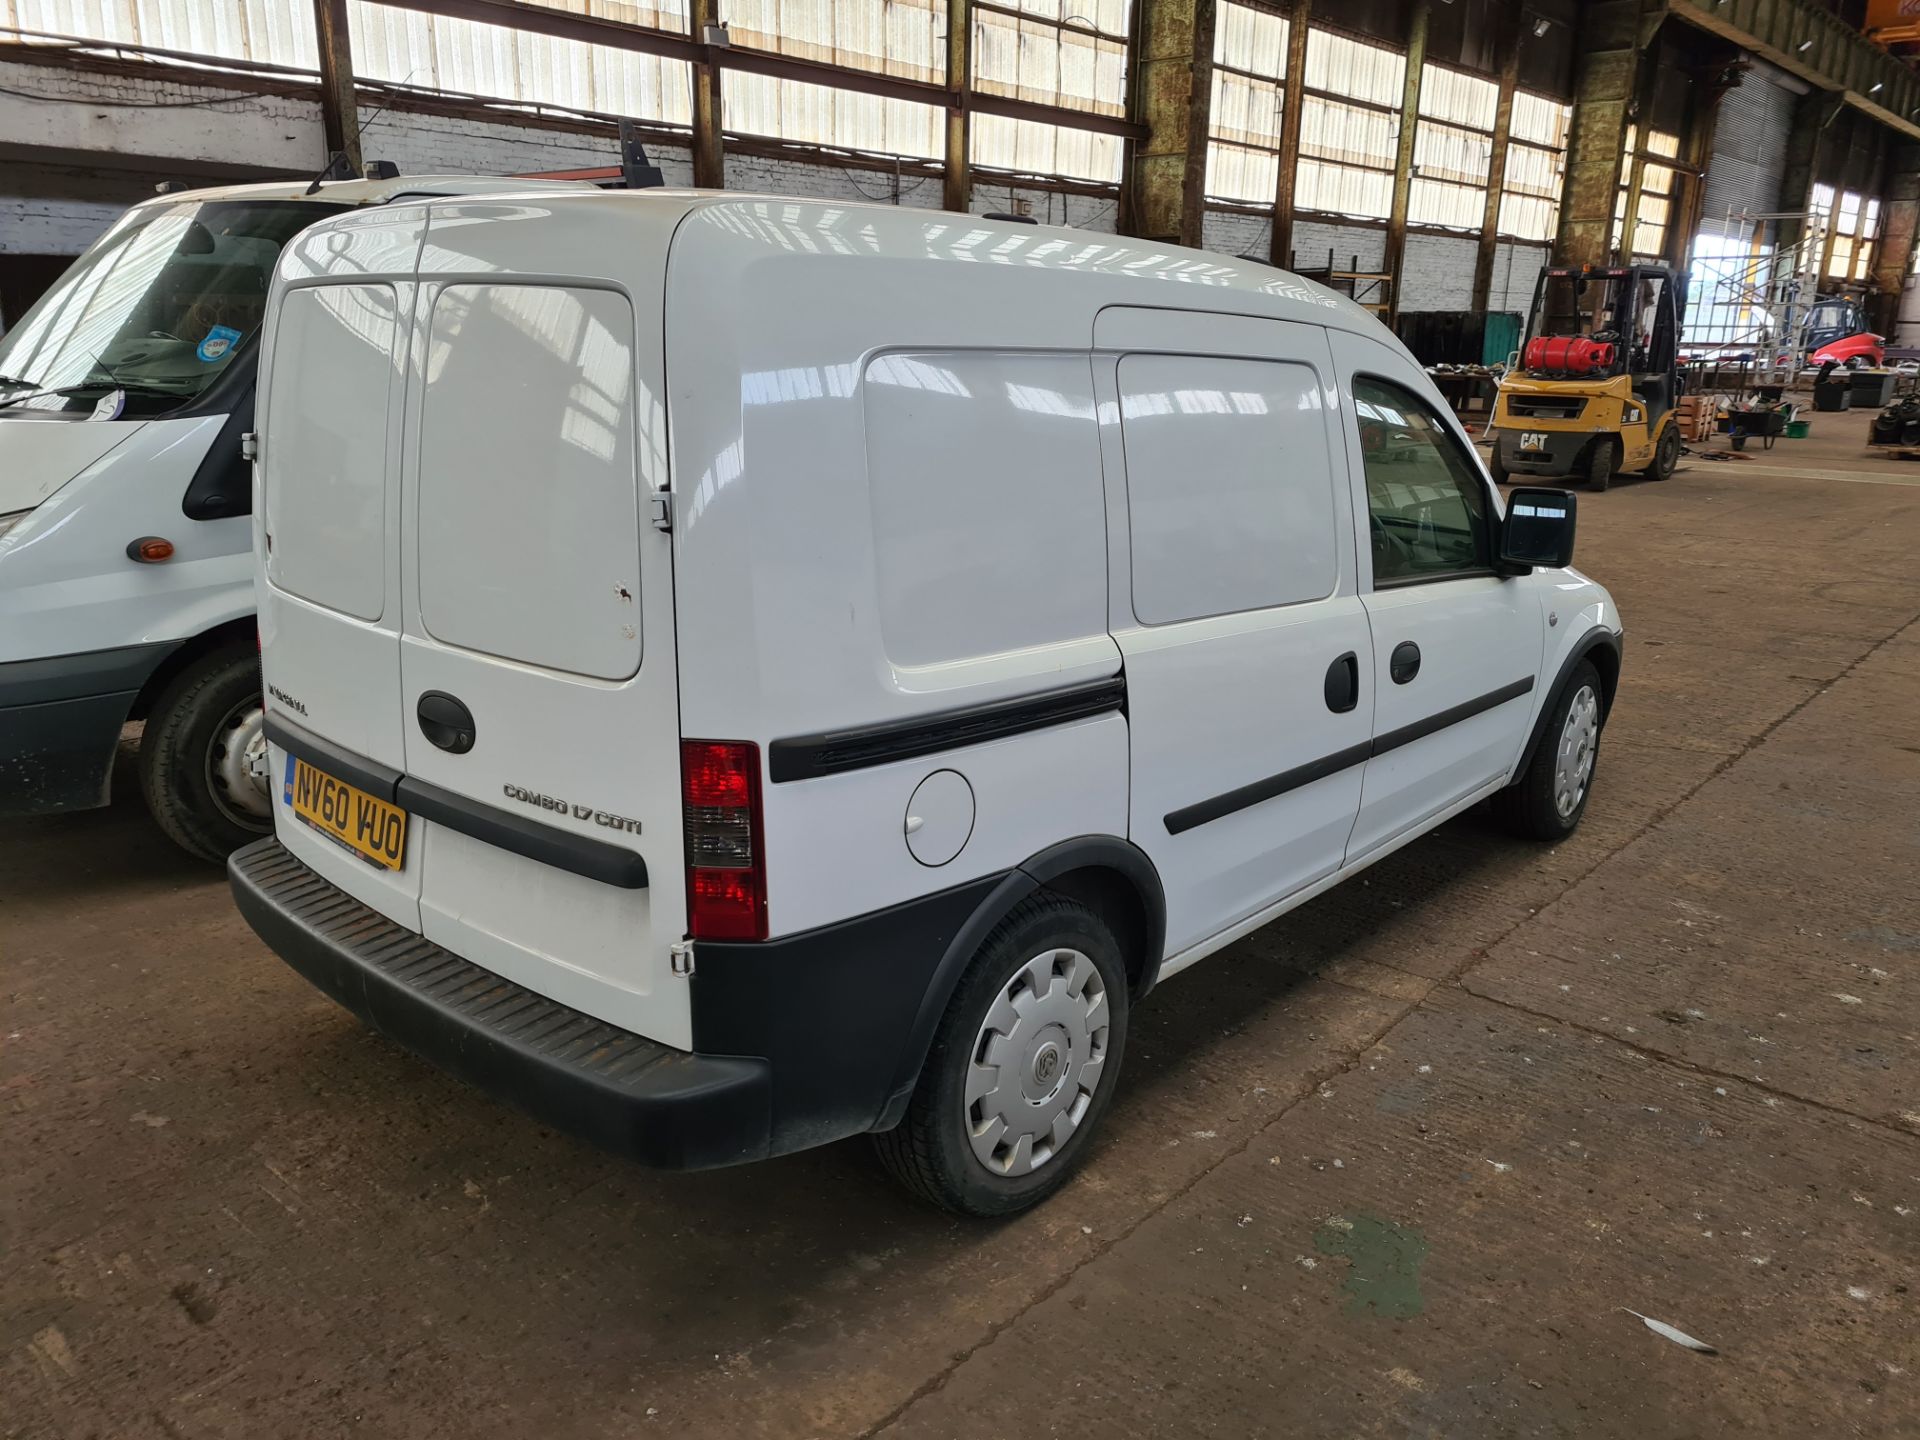 Vauxhall Combo 1.7 CDTi Diesel Panel Van, registra - Image 2 of 3